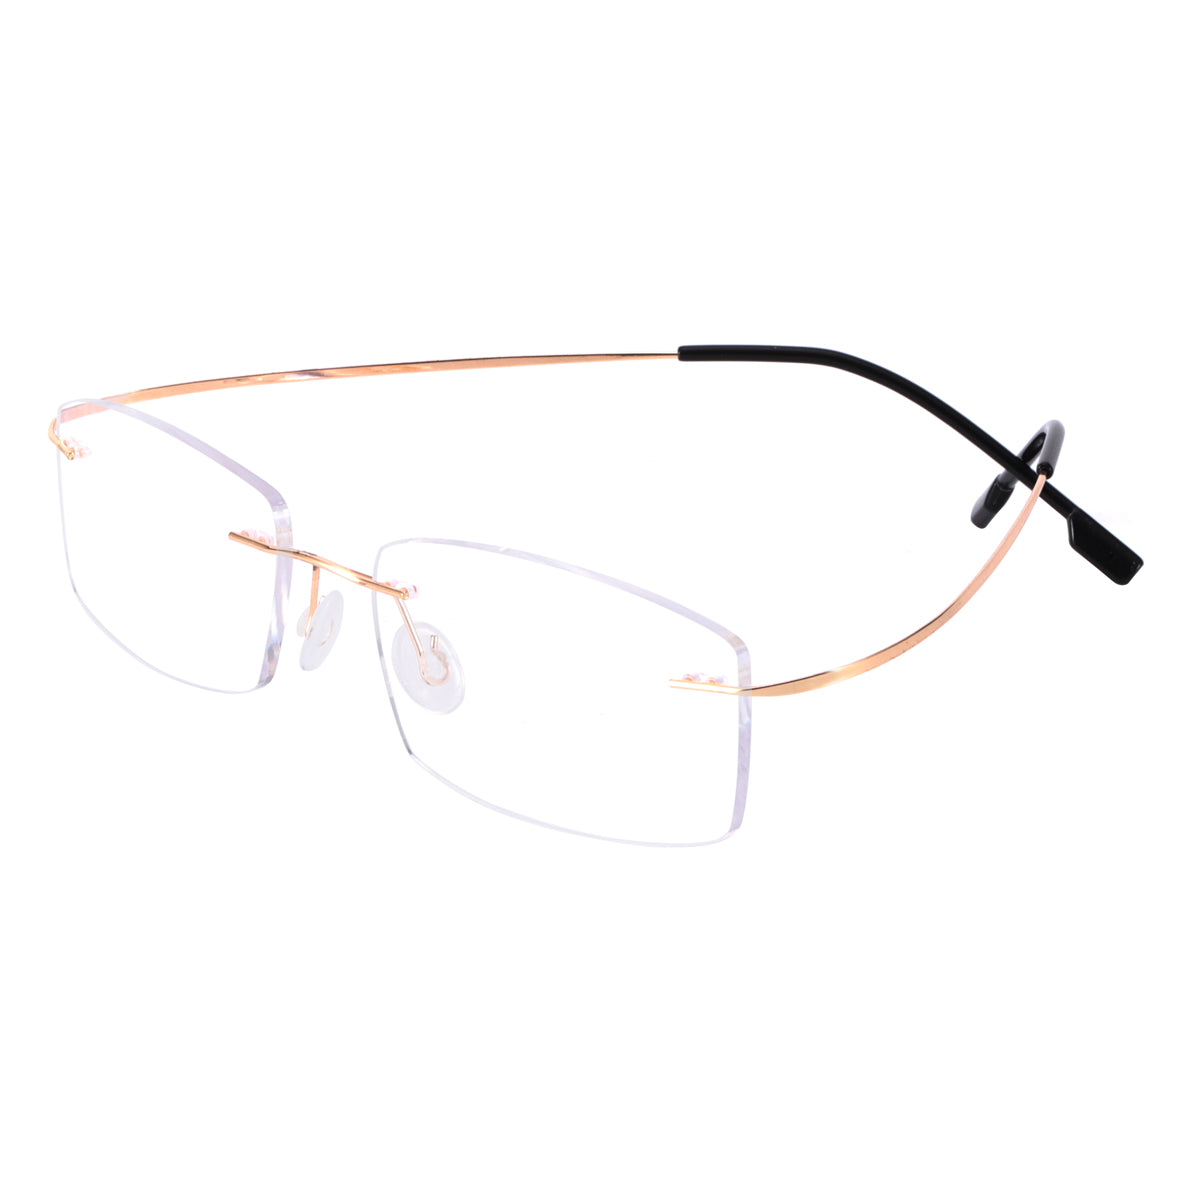 Super Flex And Light Memory Titanium Rimless Eyeglasses Frames For Myo Cinily